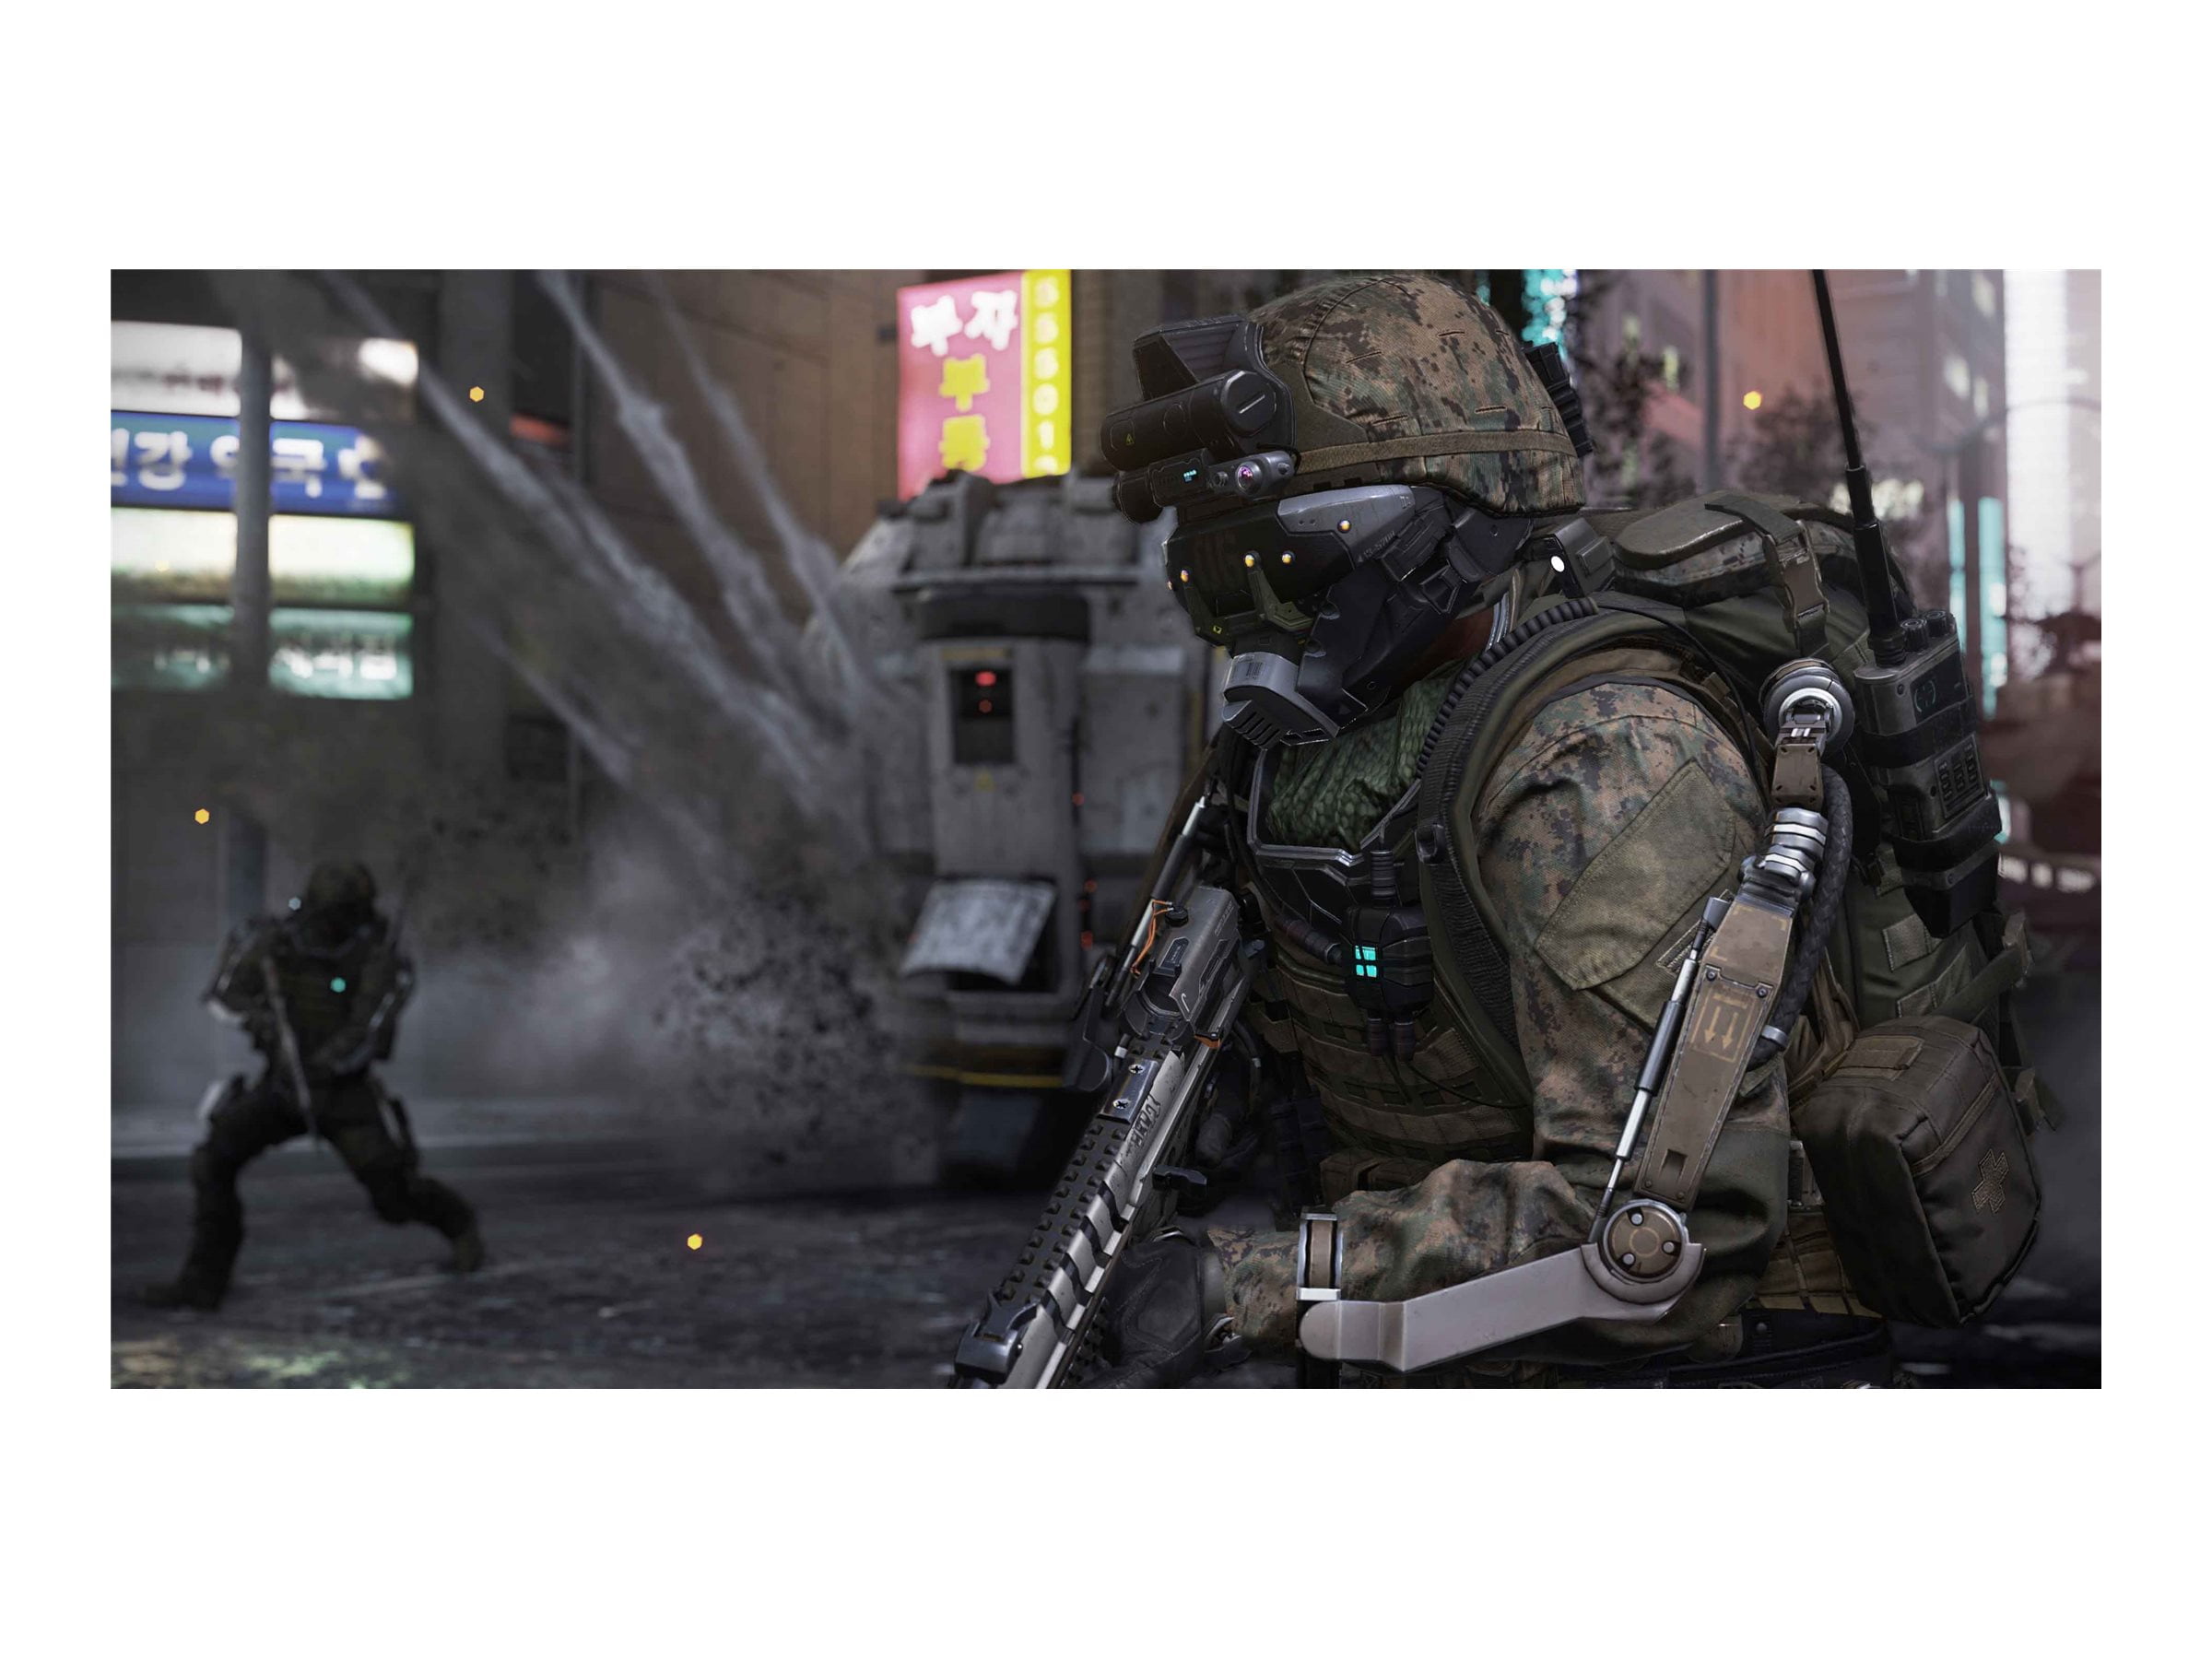 Call of Duty: Advanced Warfare Day Zero Edition Black OPS 3 III Xbox One VG